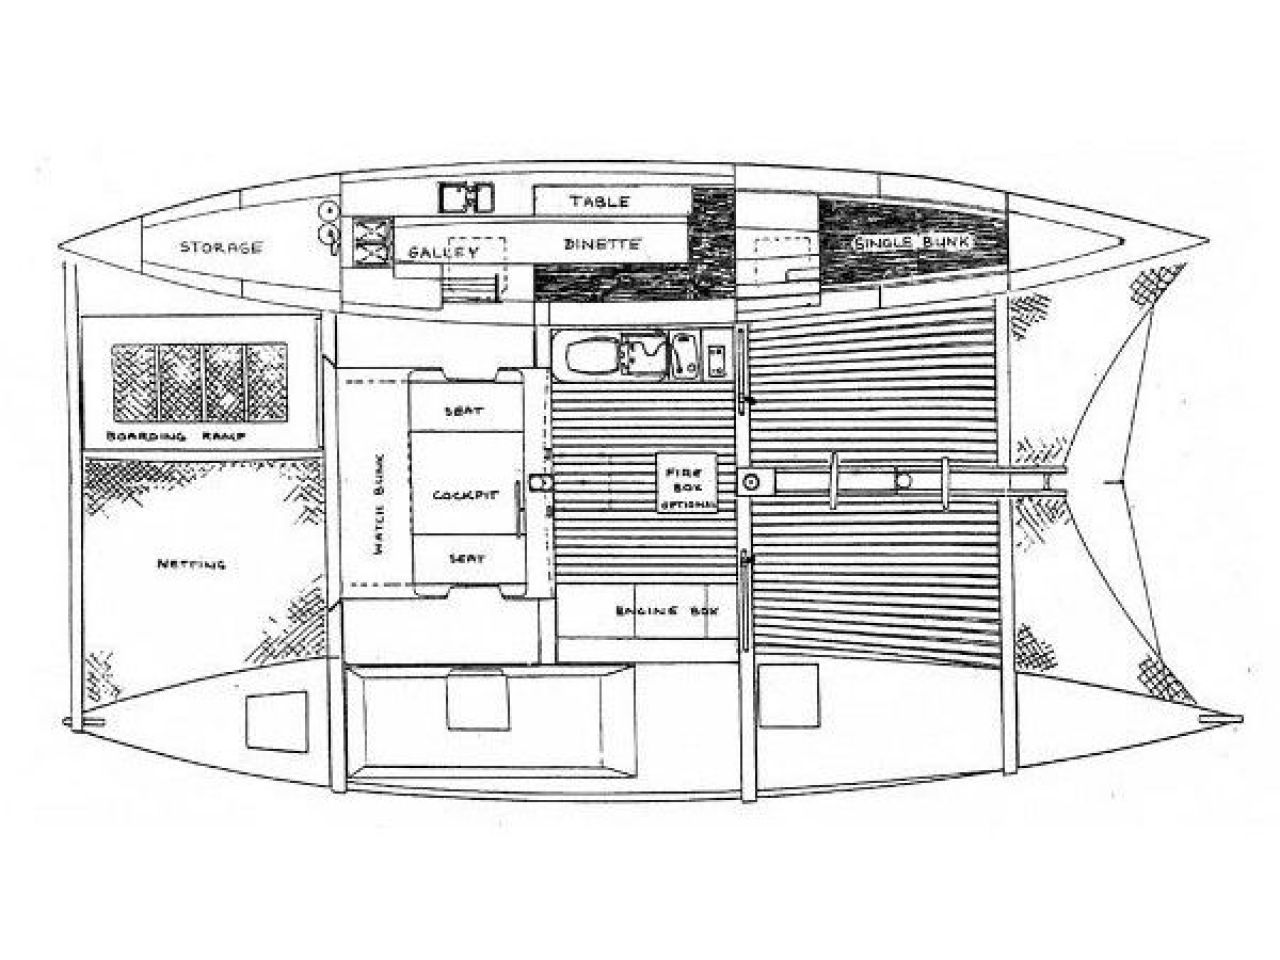 Drawing of a double canoe catamaran layout